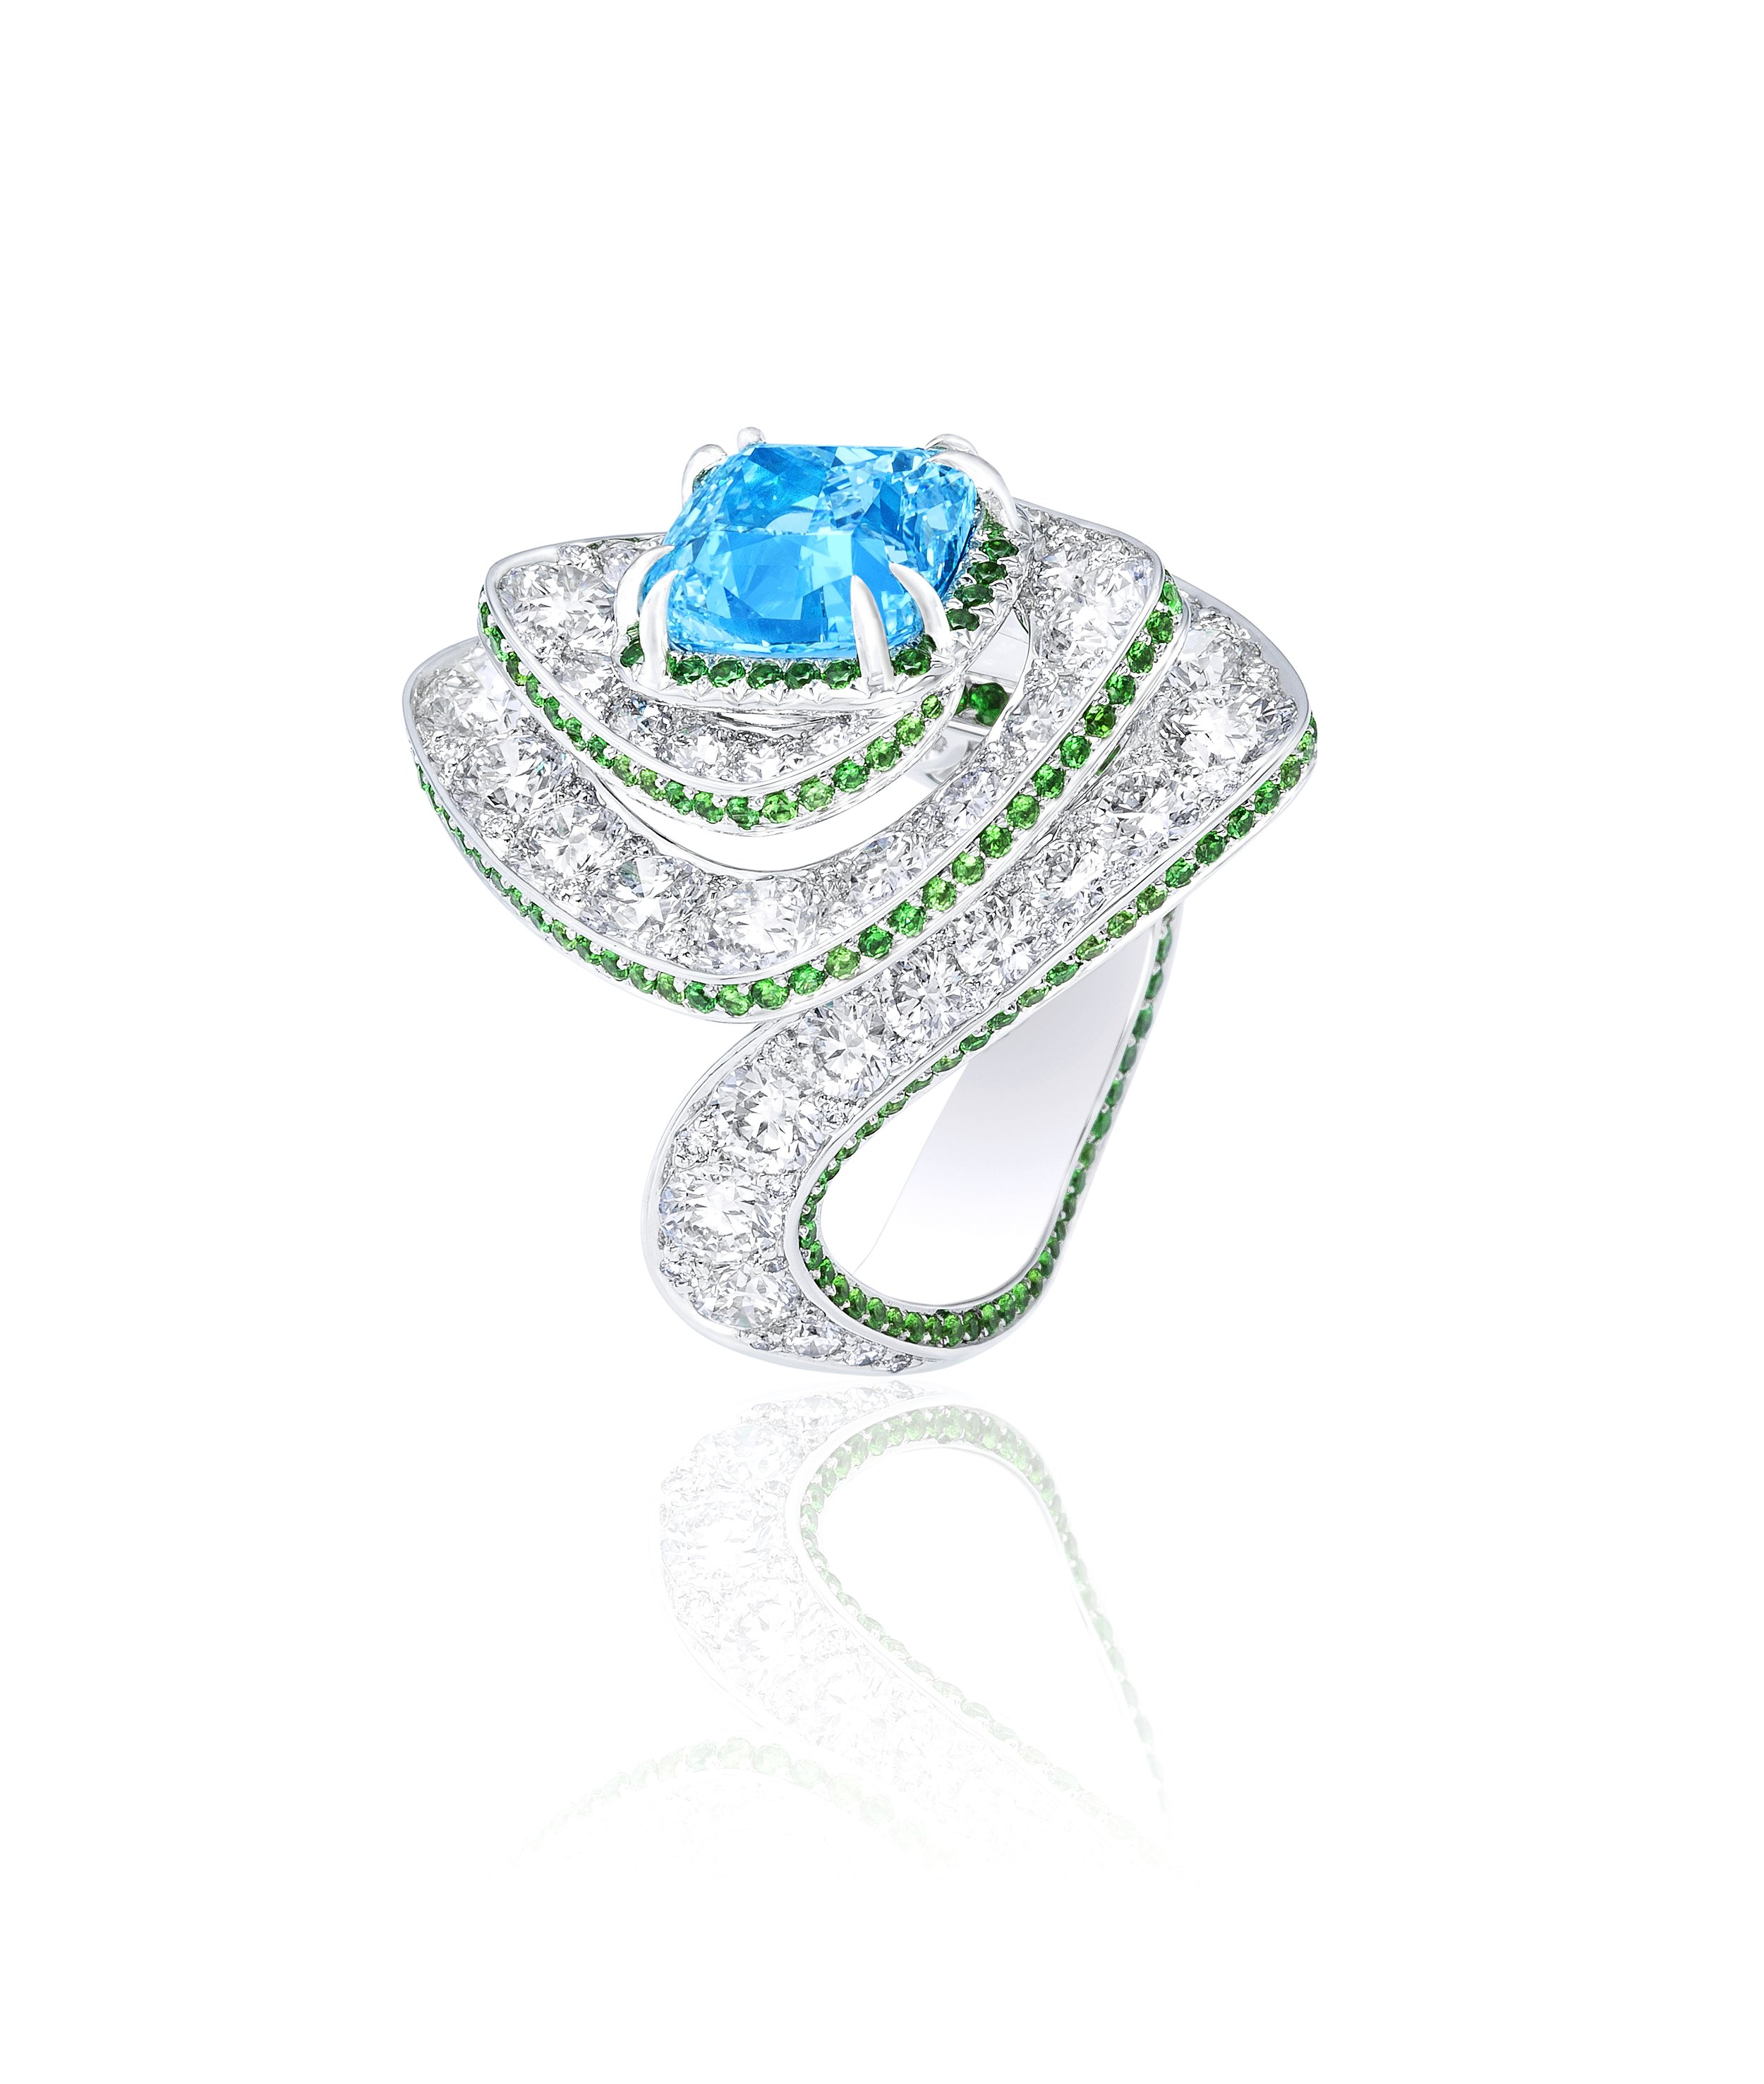 ANNA HU bague Skylight en or blanc et or palladié, diamant bleu-vert fancy intense, diamants et grenats tsavorites.jpg